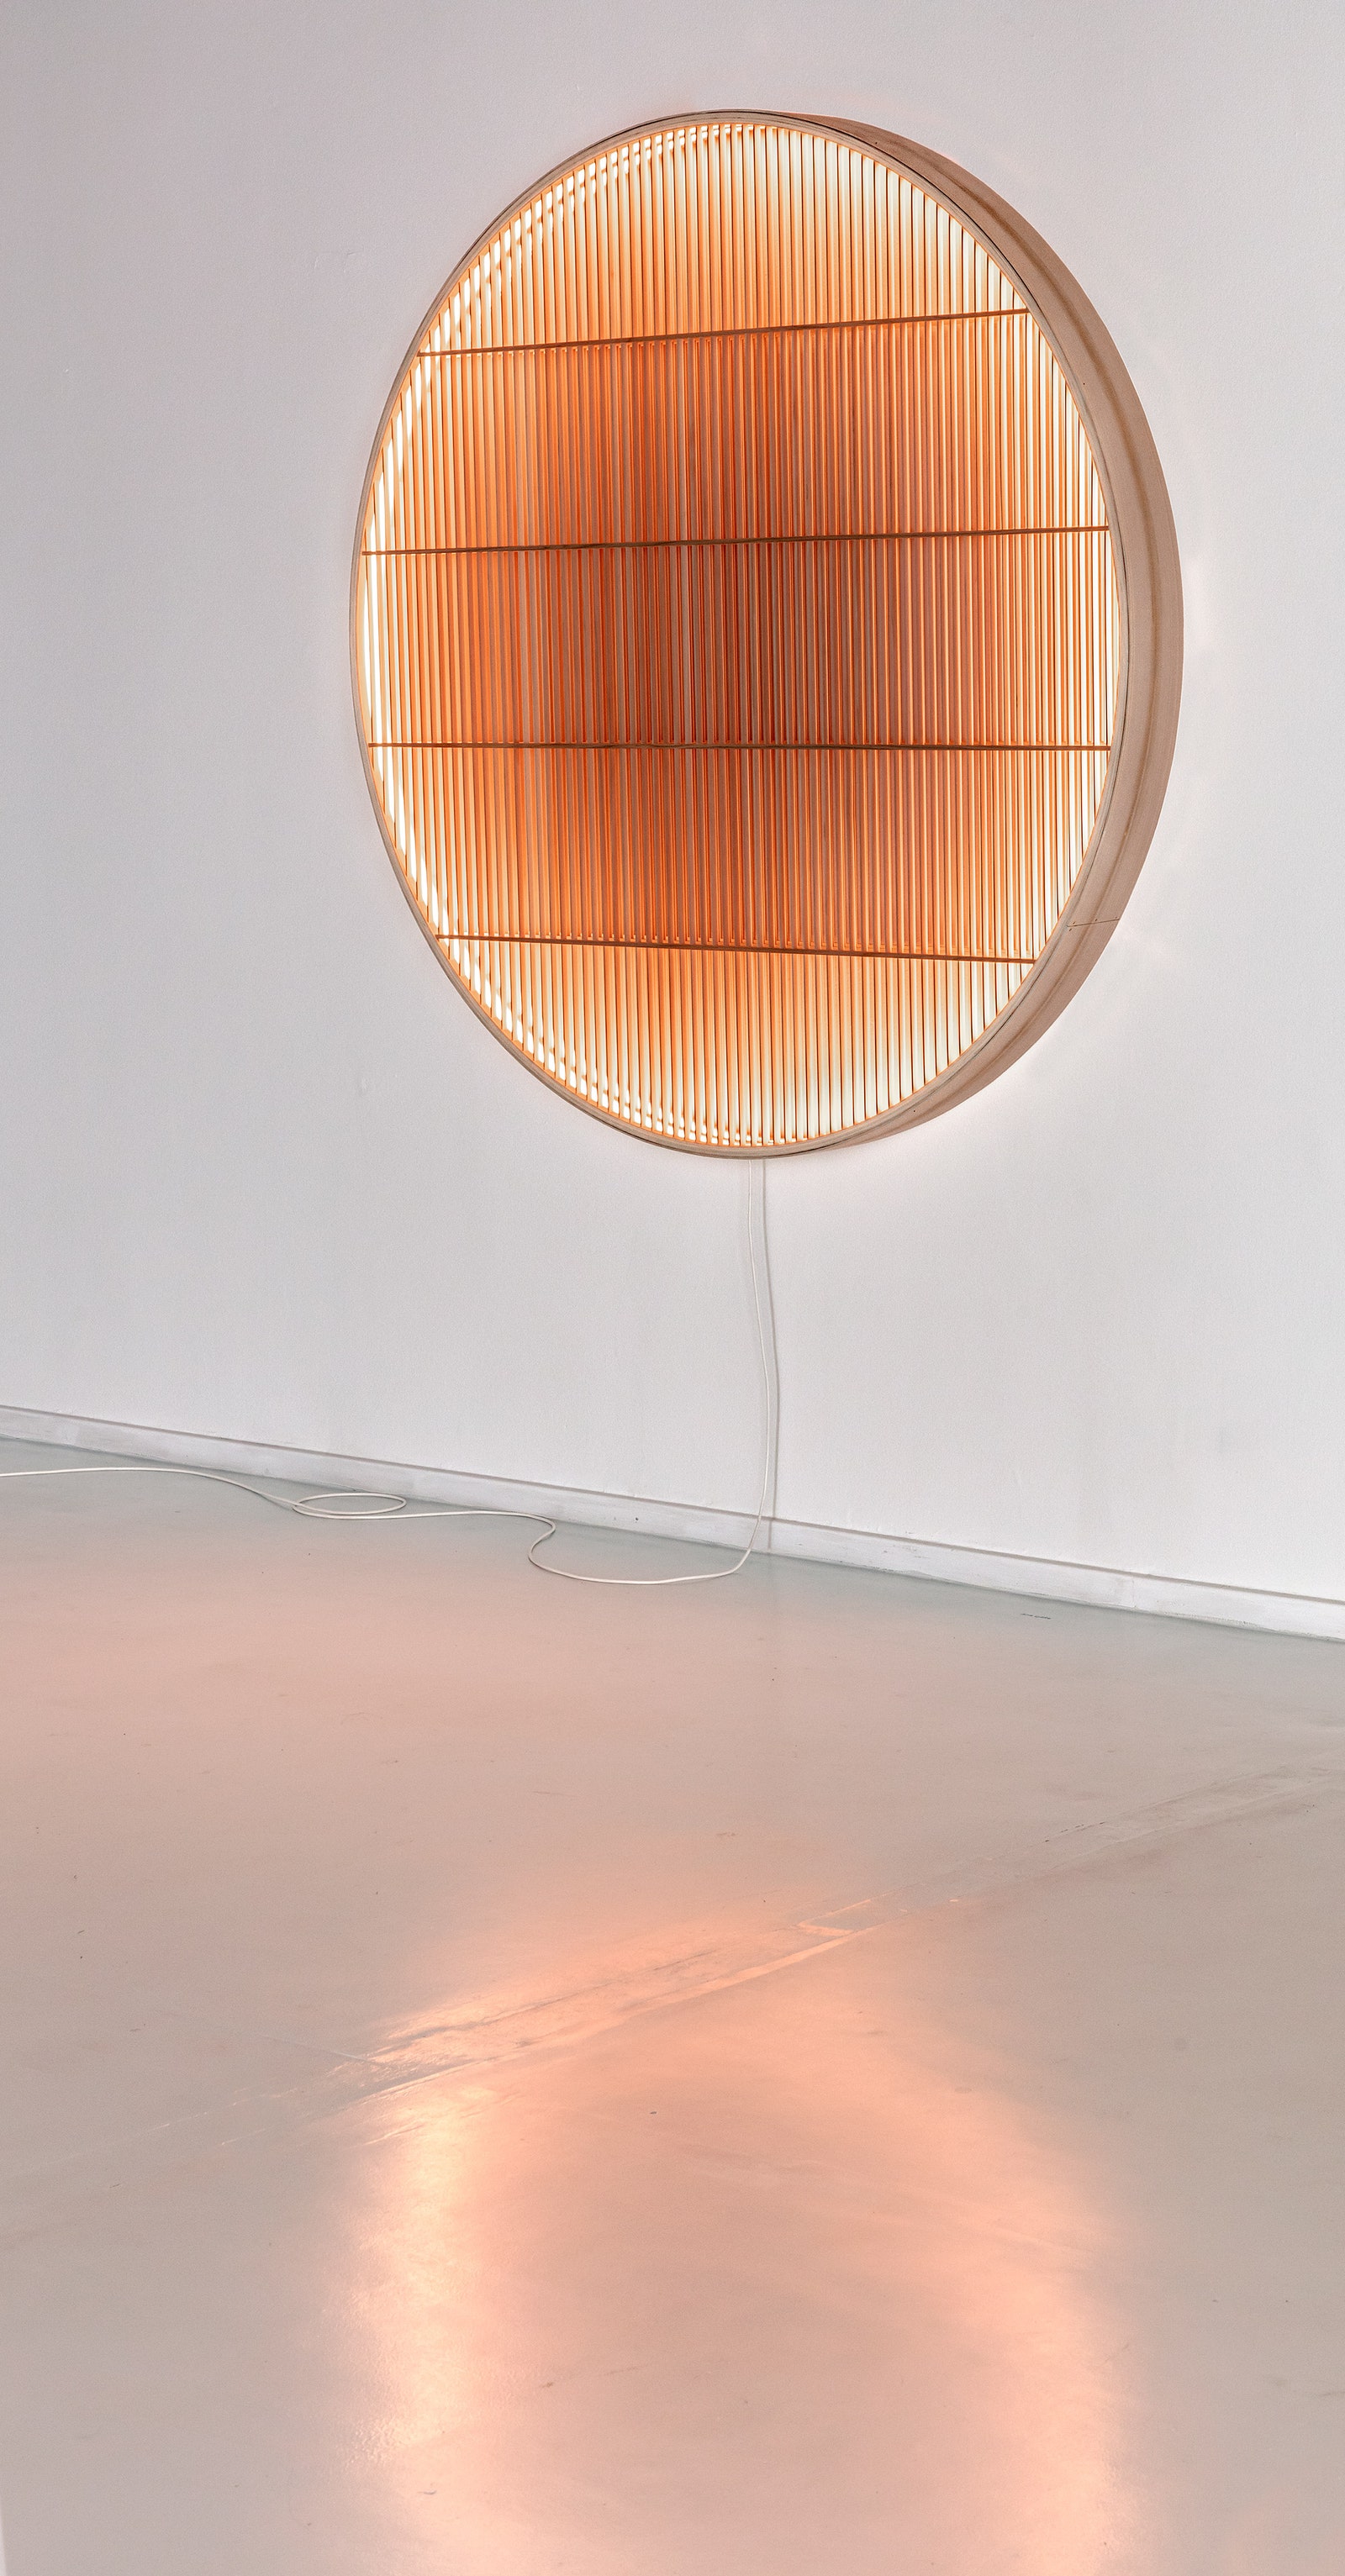 Light Object датского дизайнера Ане Ликке на Design MiamiBasel 2019